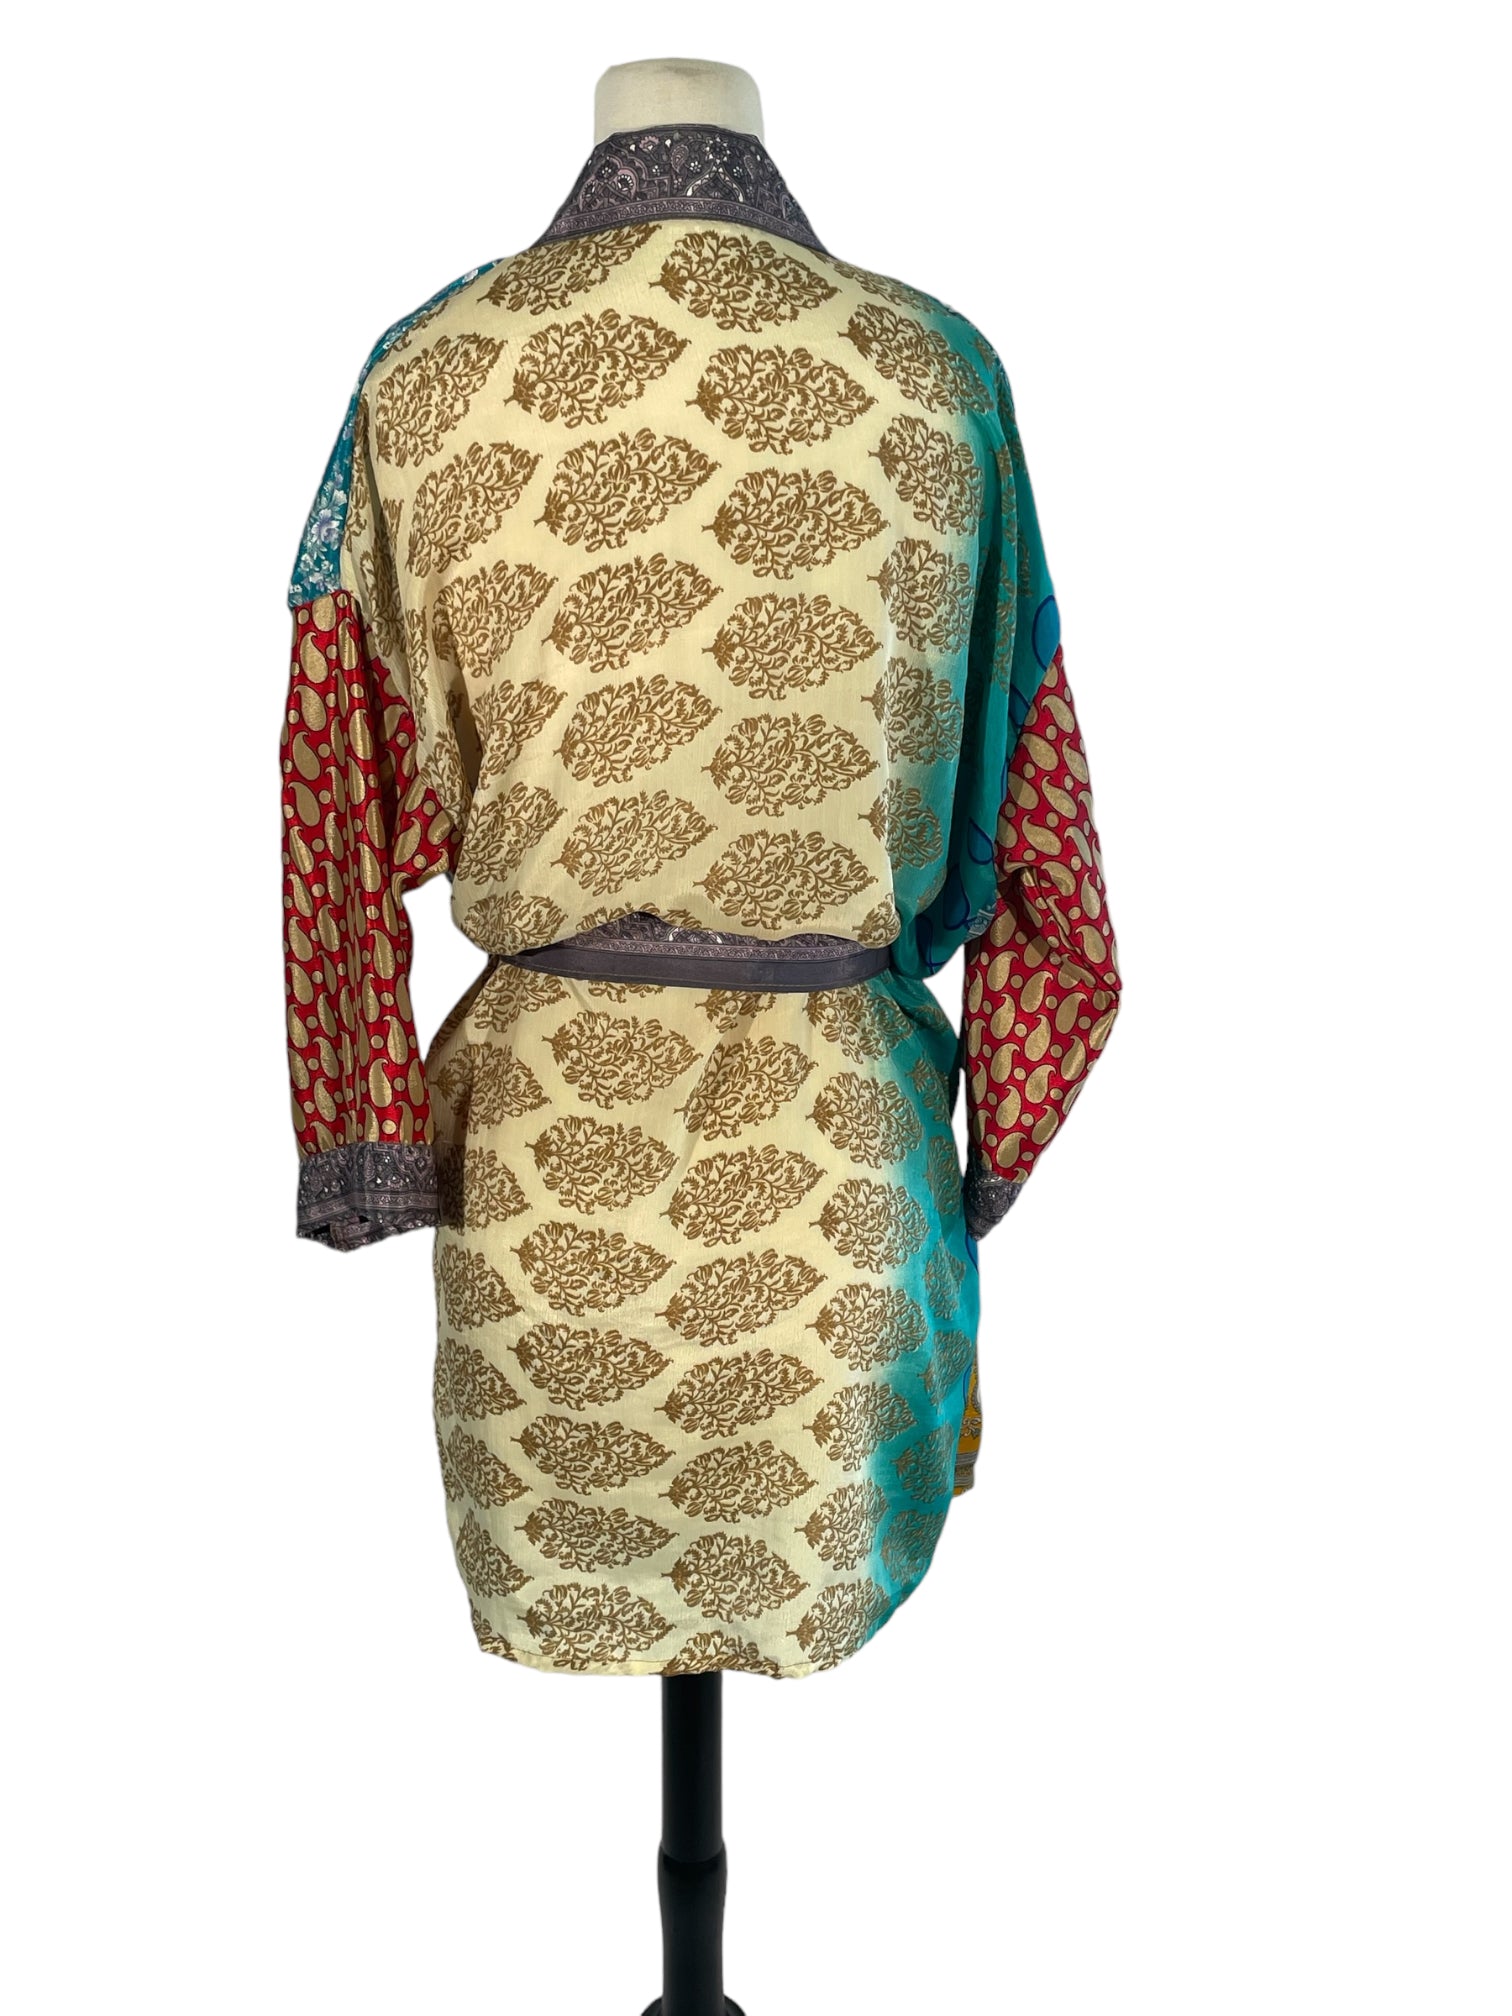 KKJ-101 Kimono Patchwork Jacket in Vintage Silk